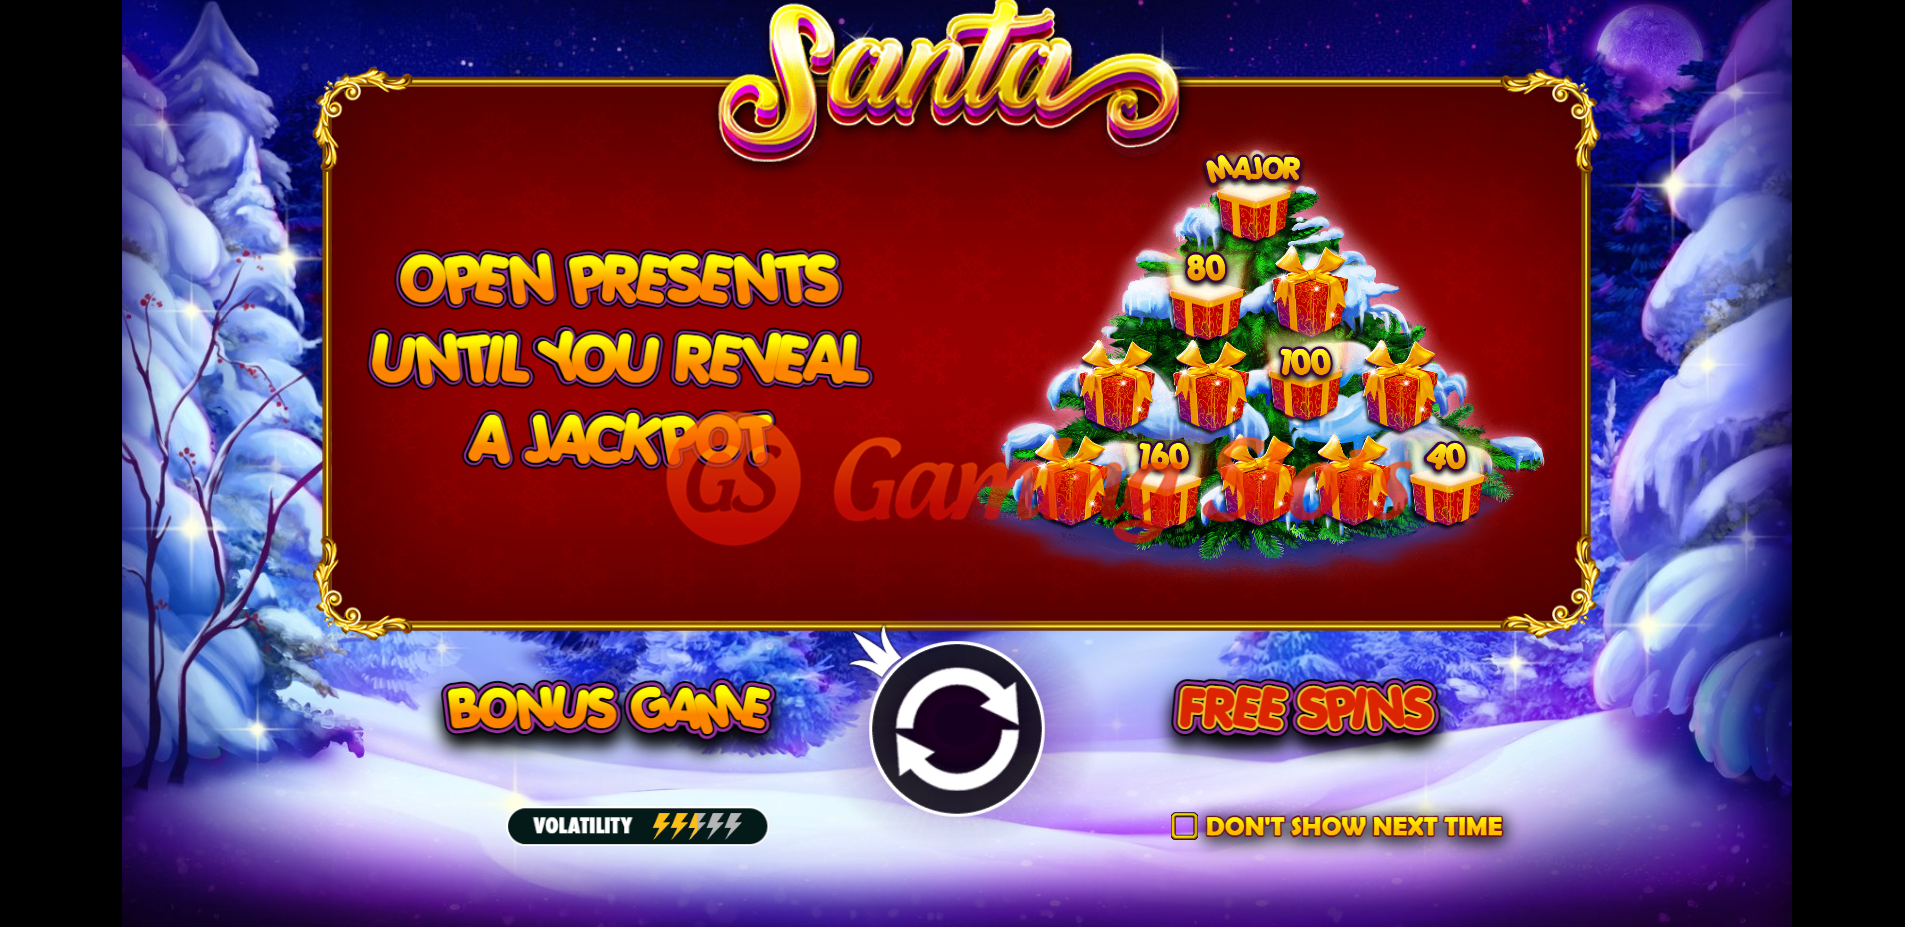 Game Intro for Santa slot by Pragmatic Play